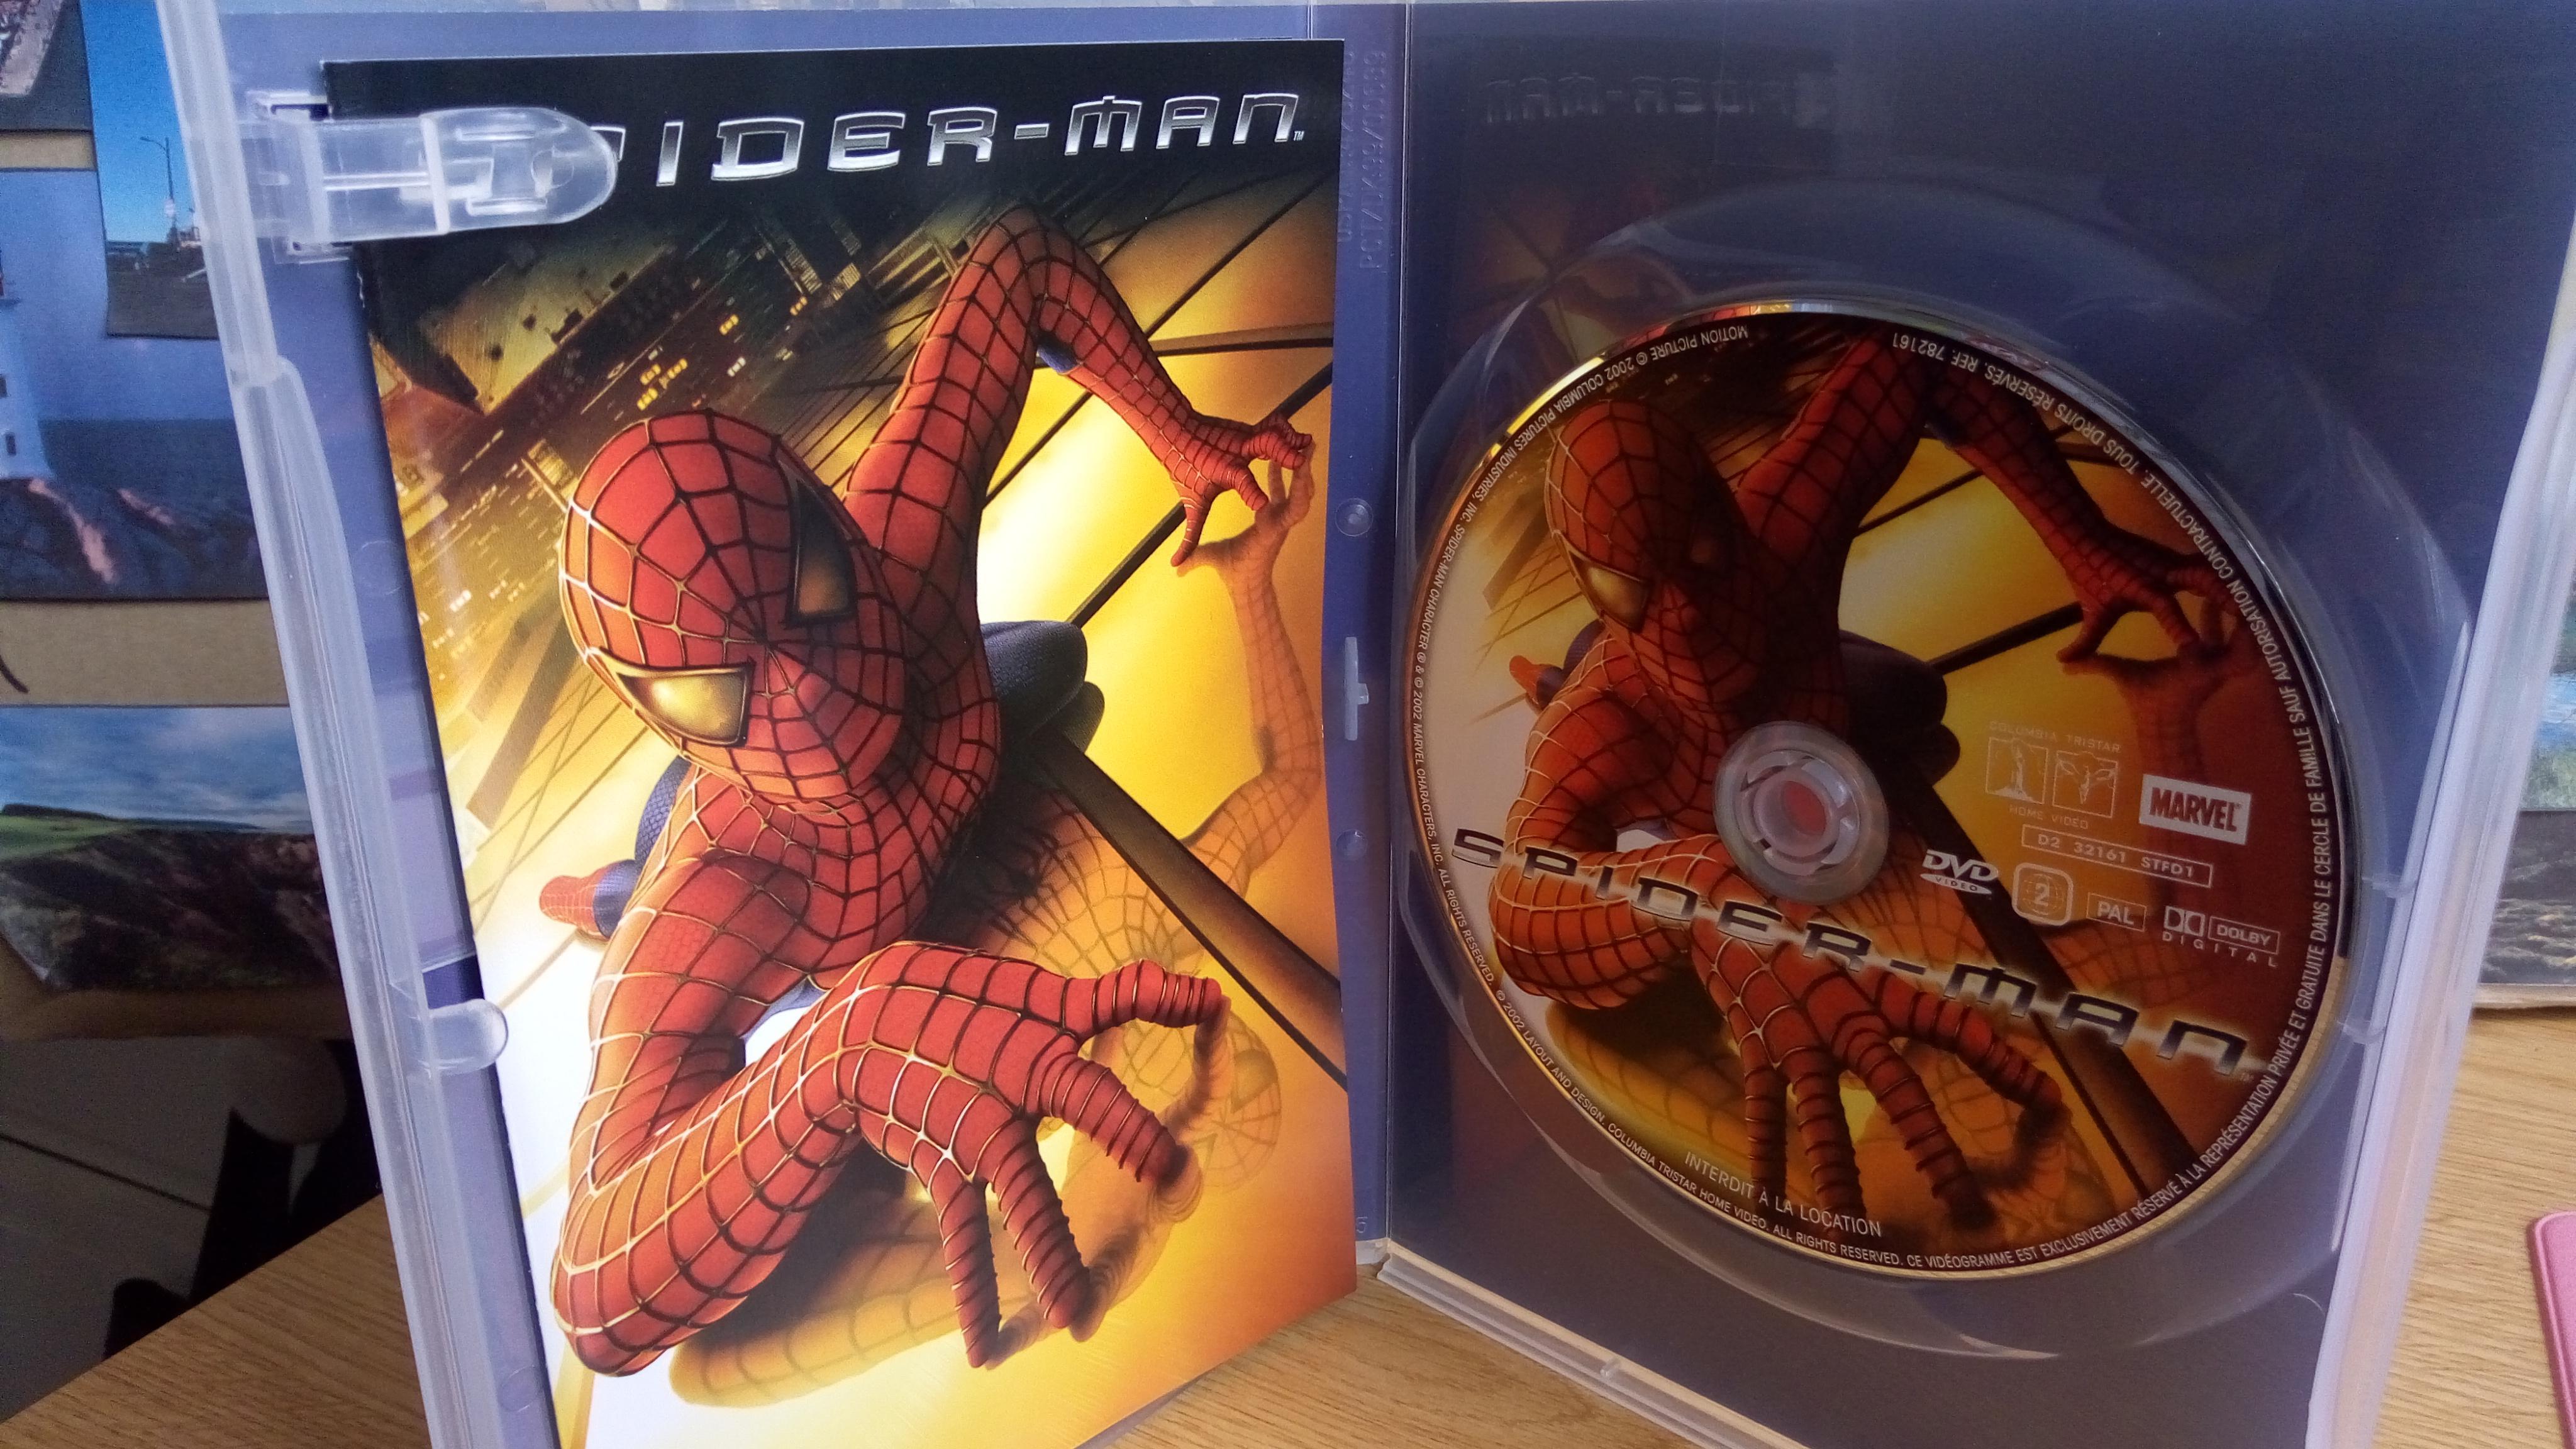 troc de troc spiderman 1 (sam raimi) - dvd image 2